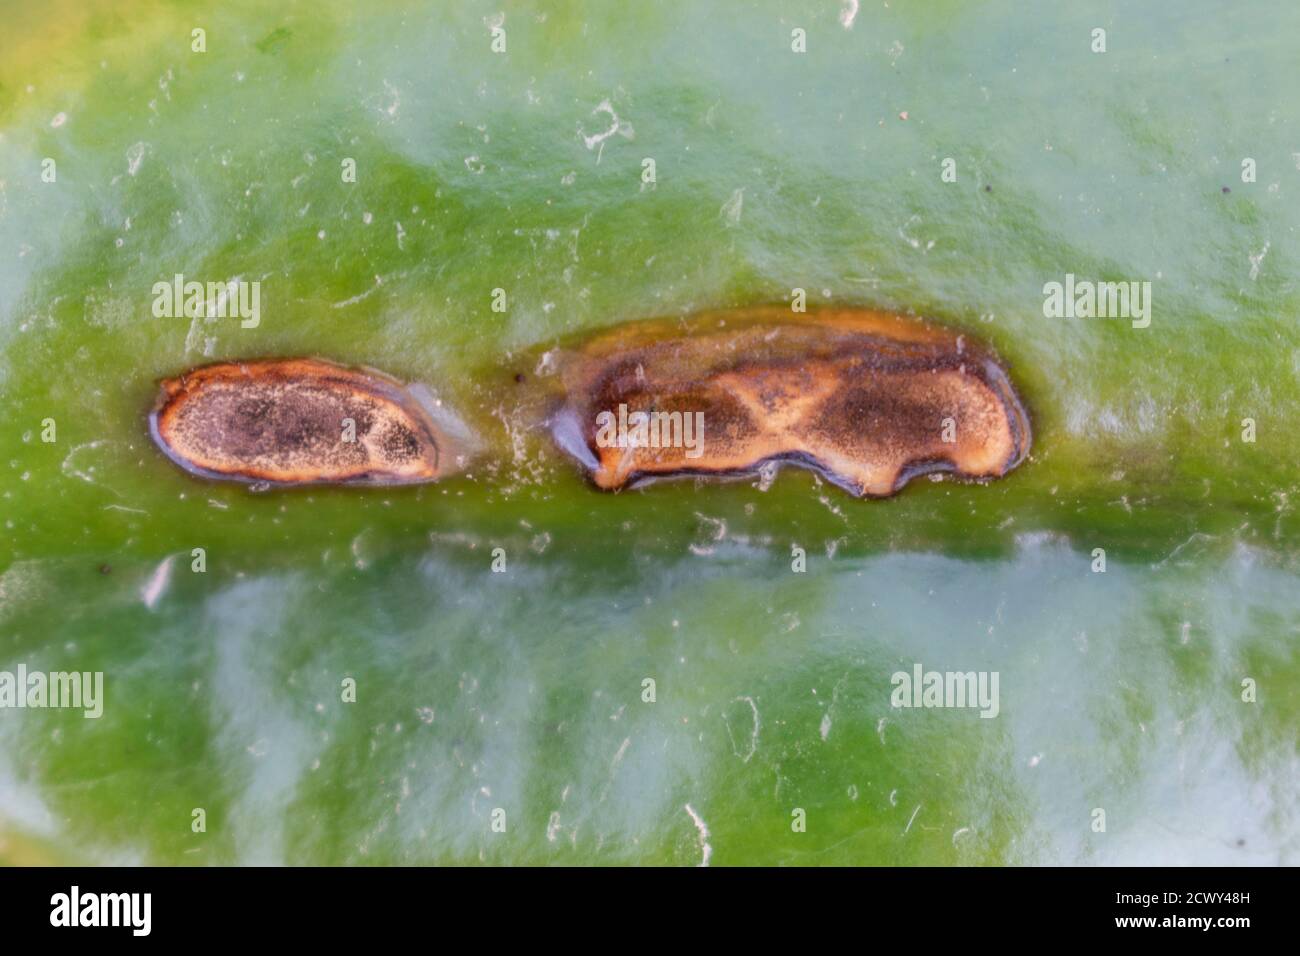 Close up of Sclerotinia sclerotiorum fungus disease on bell pepper Stock Photo